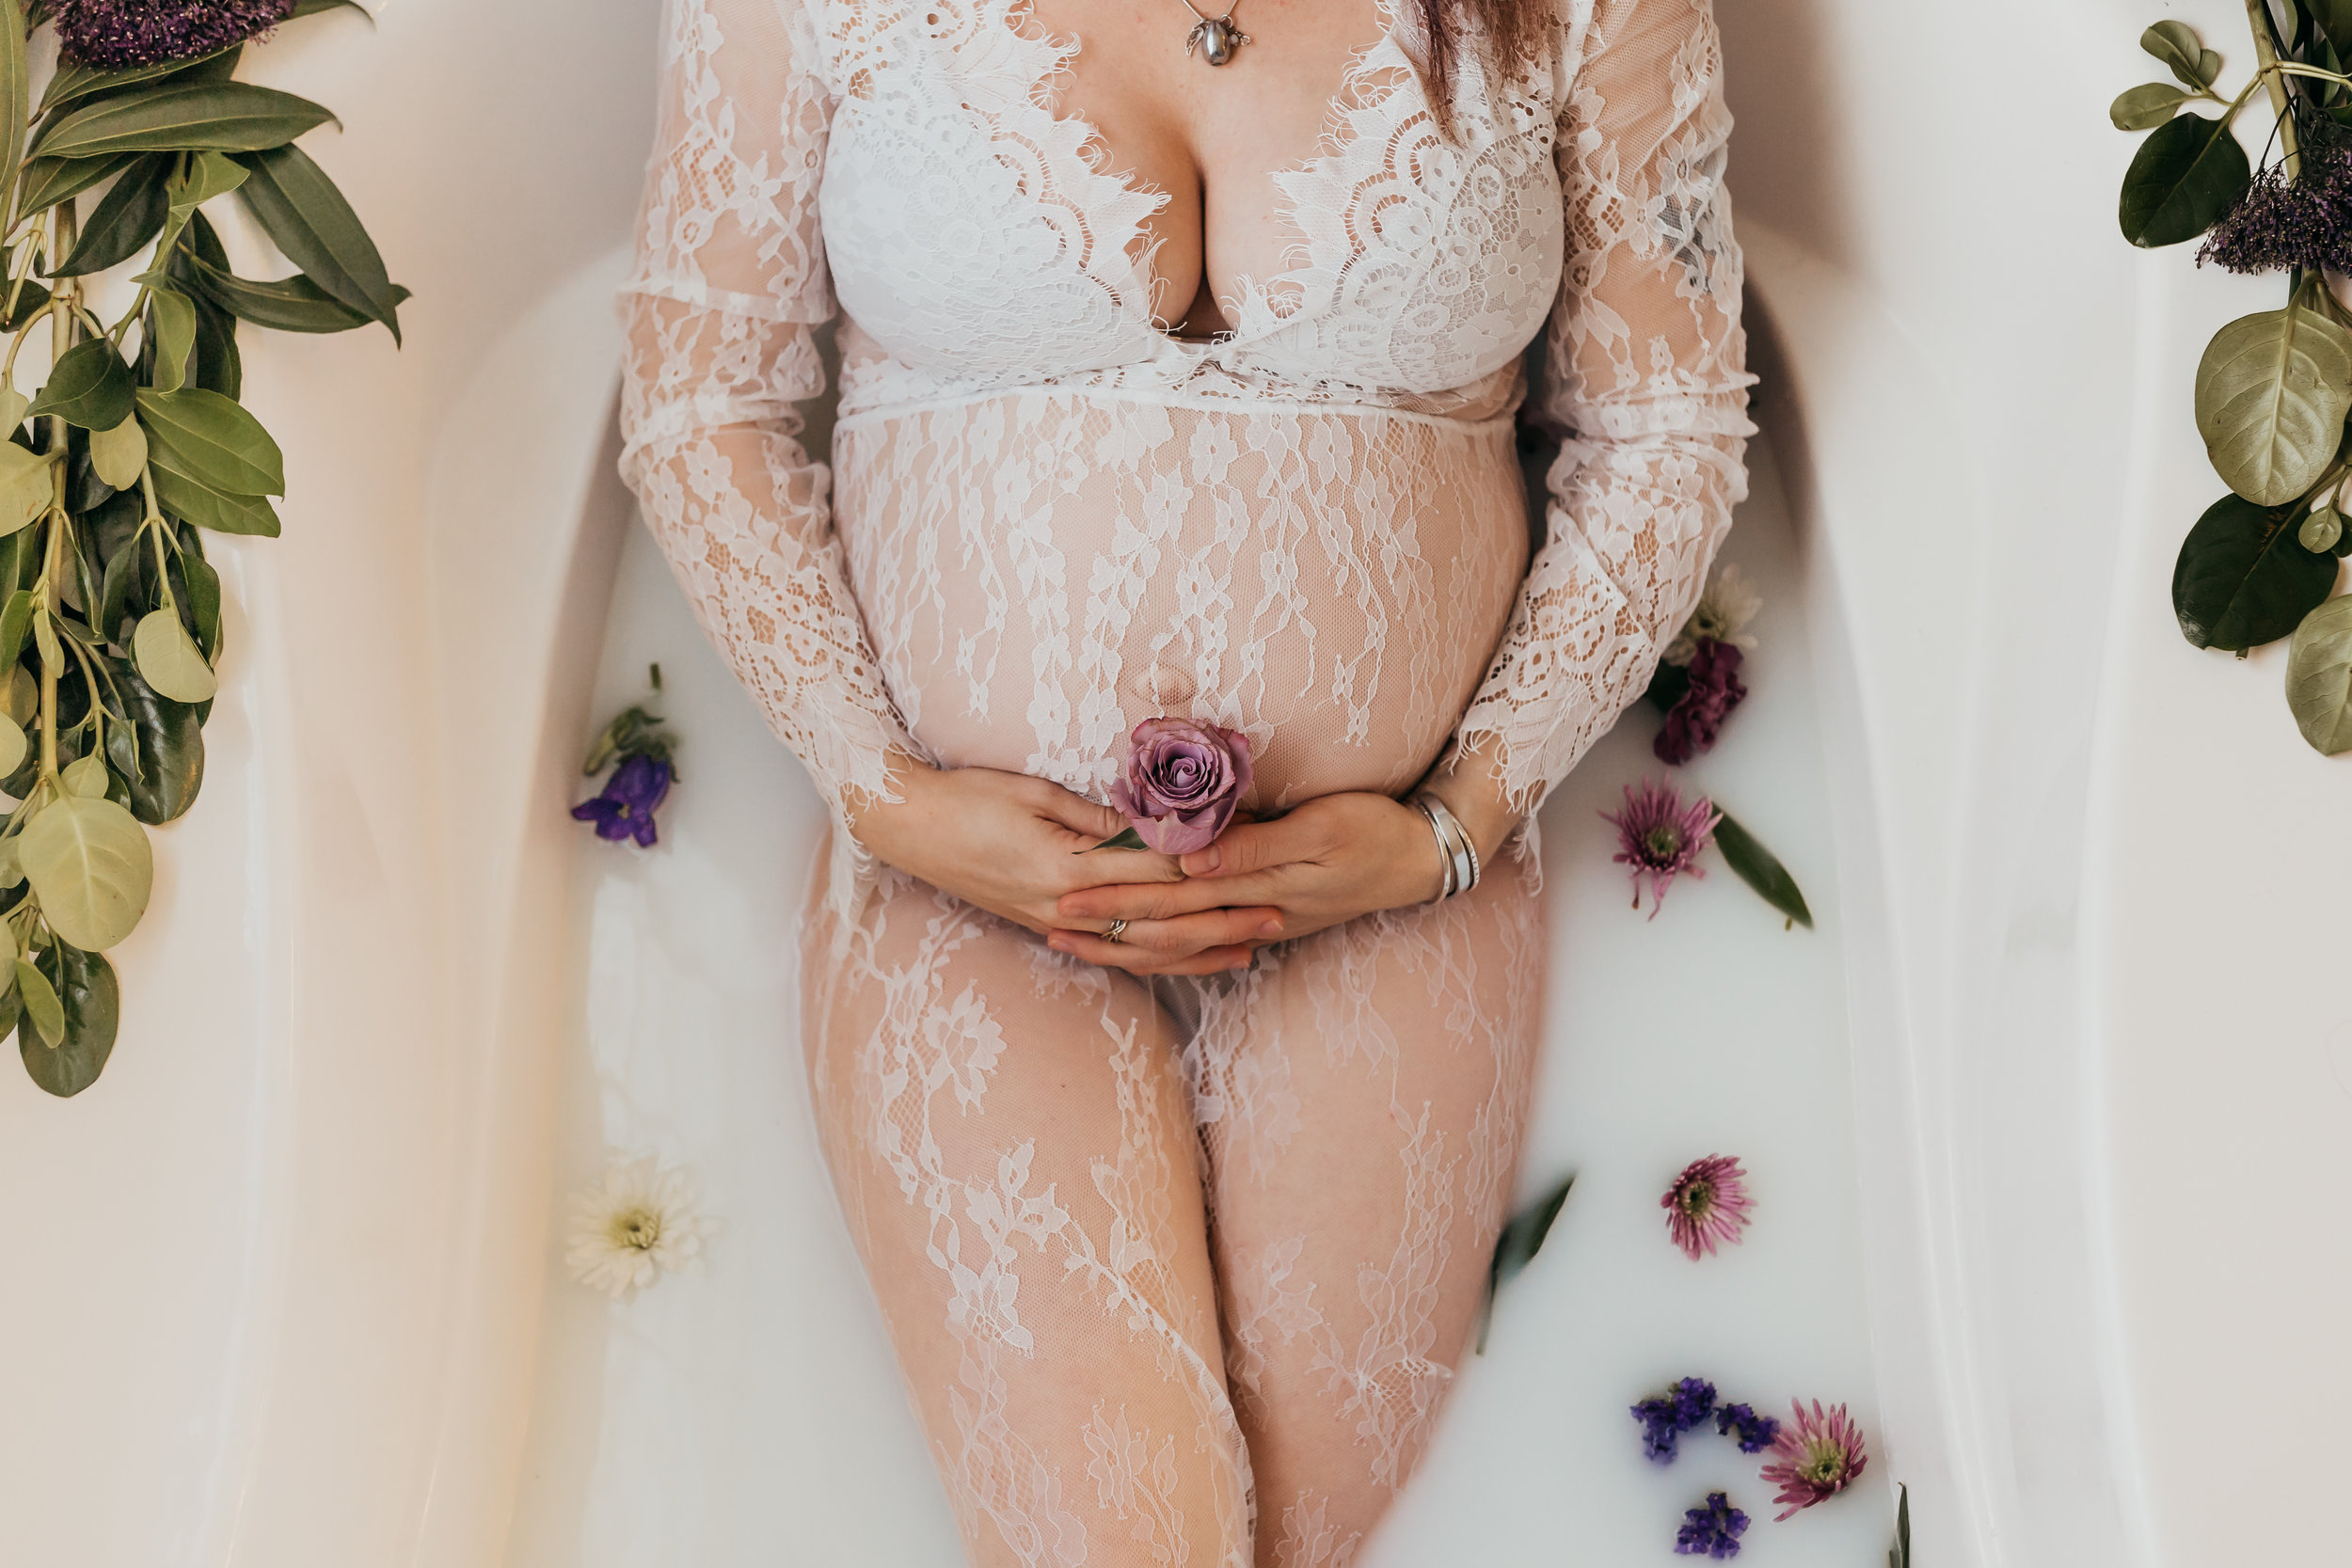 woman holding flower during milk bath